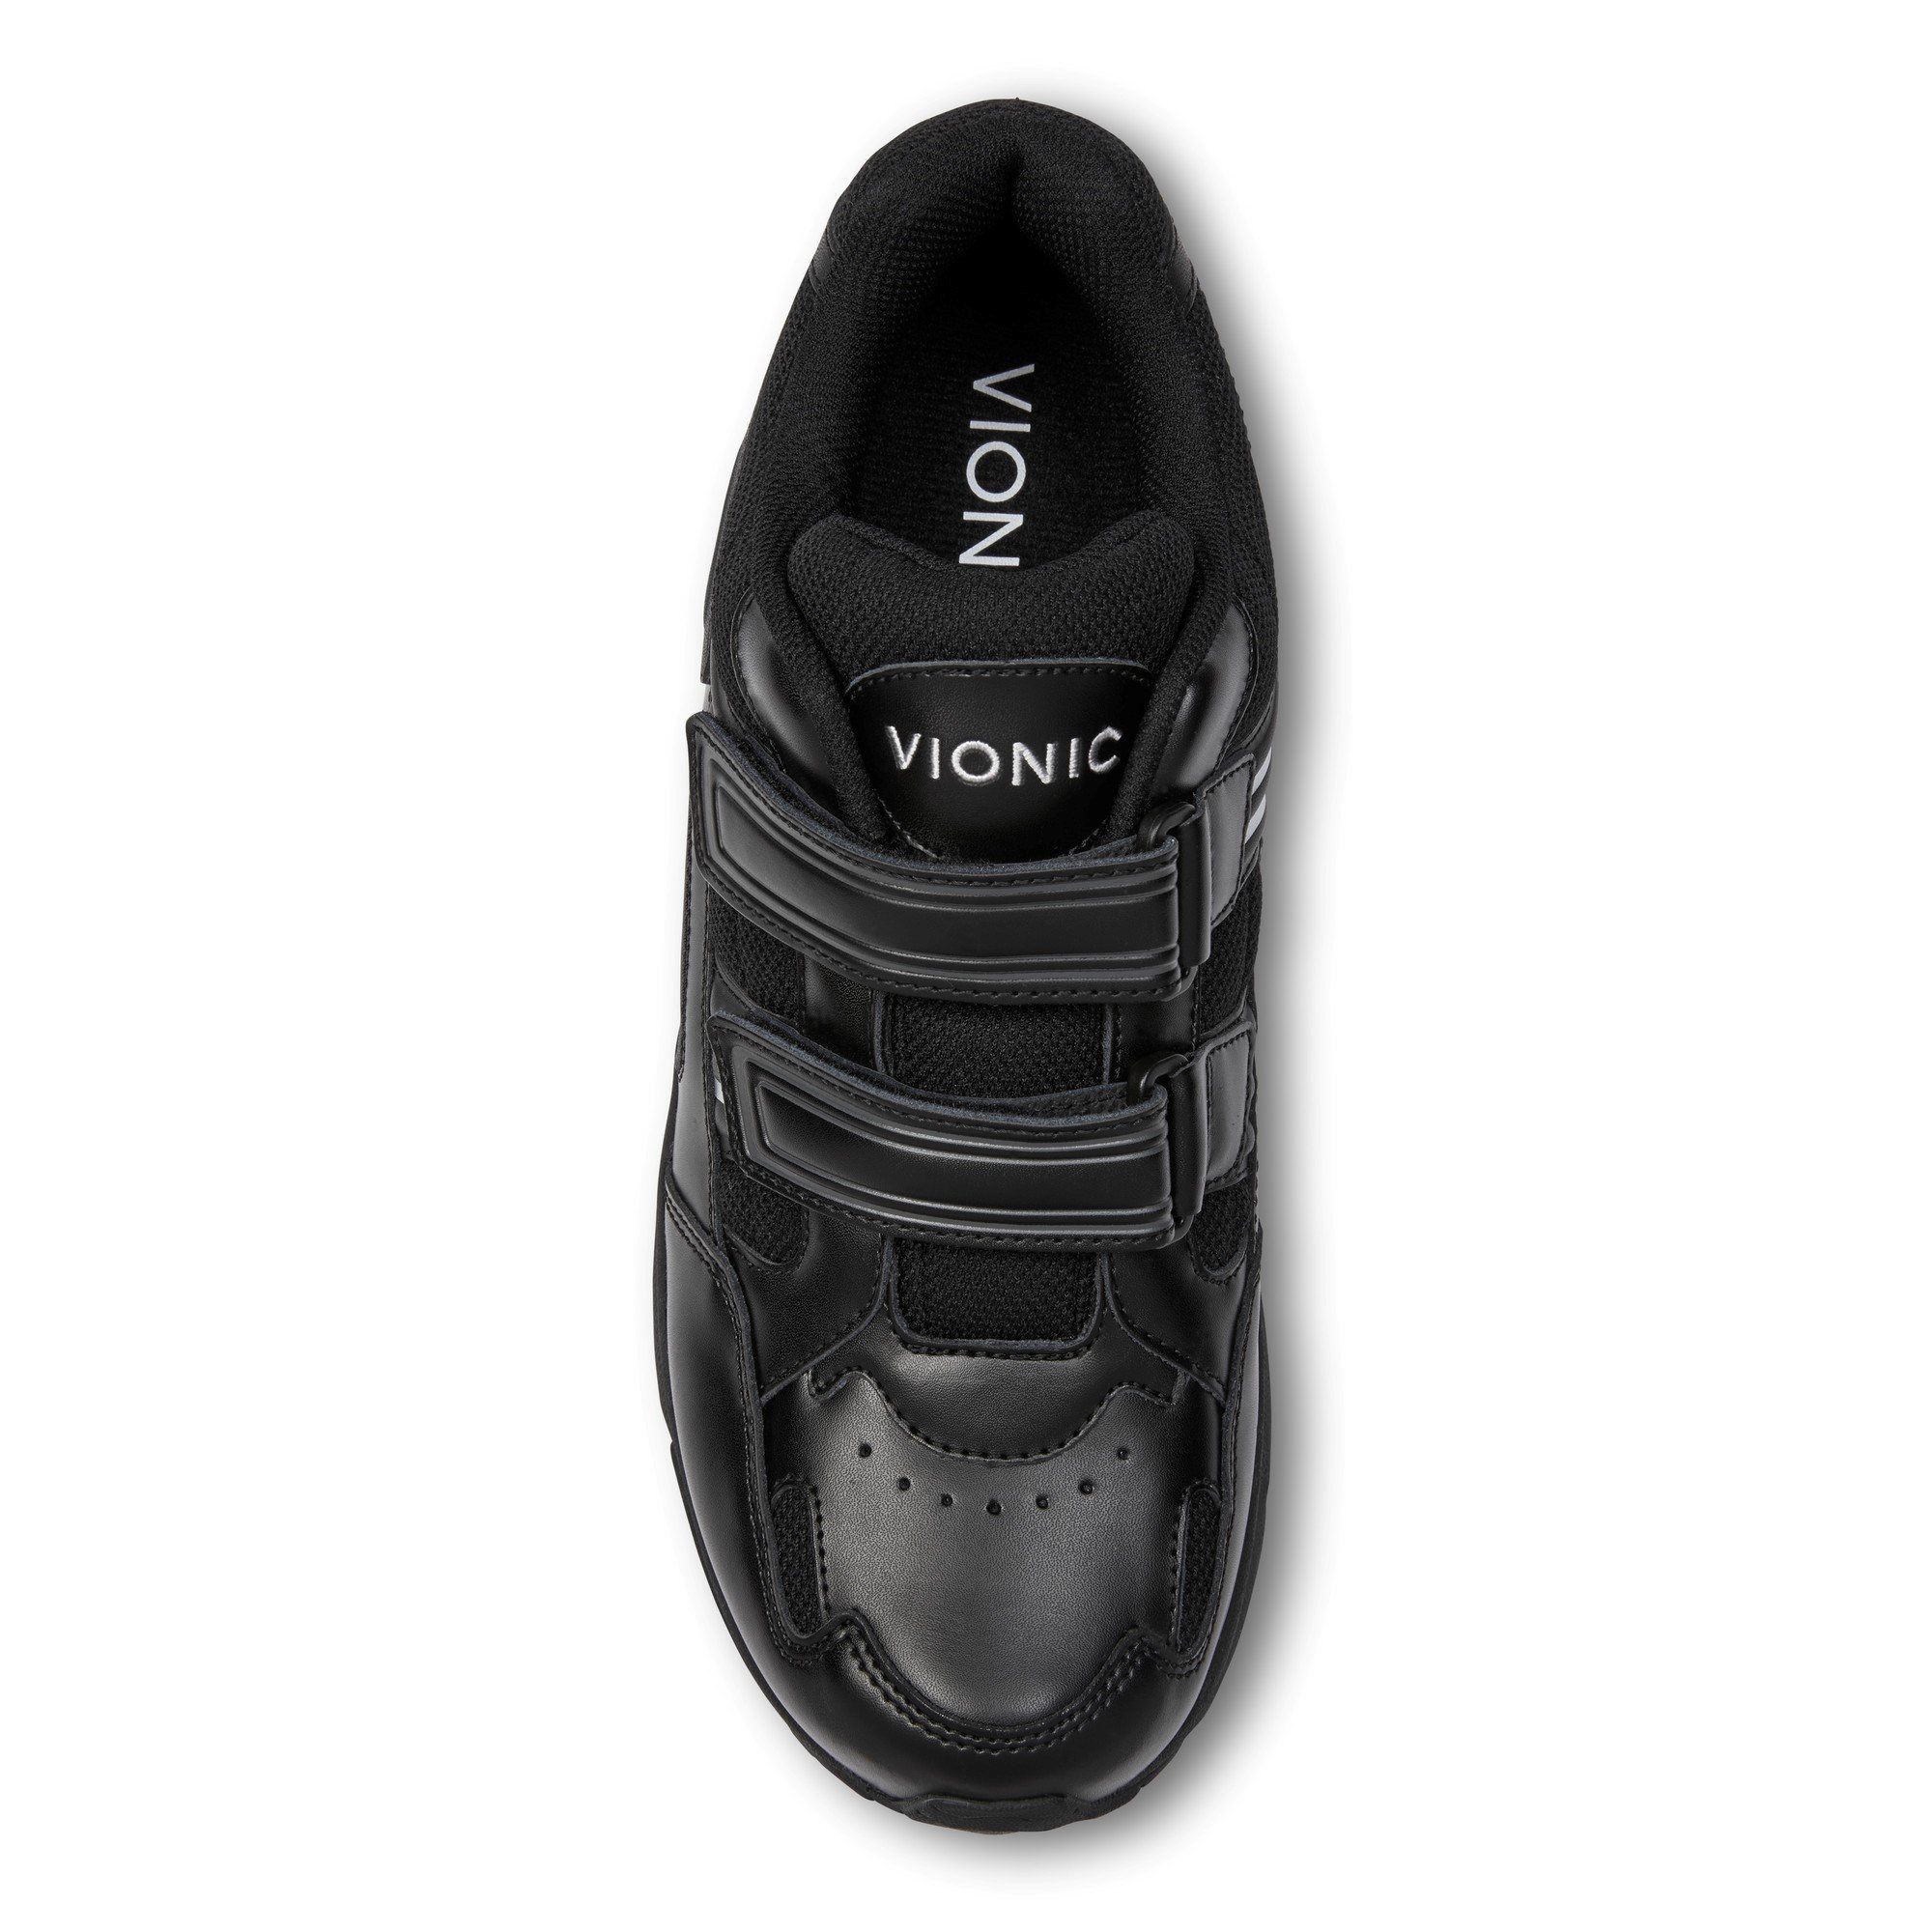 Vionic Albert Men's Orthotic Walking Shoe - Strap Closure - image 3 of 7